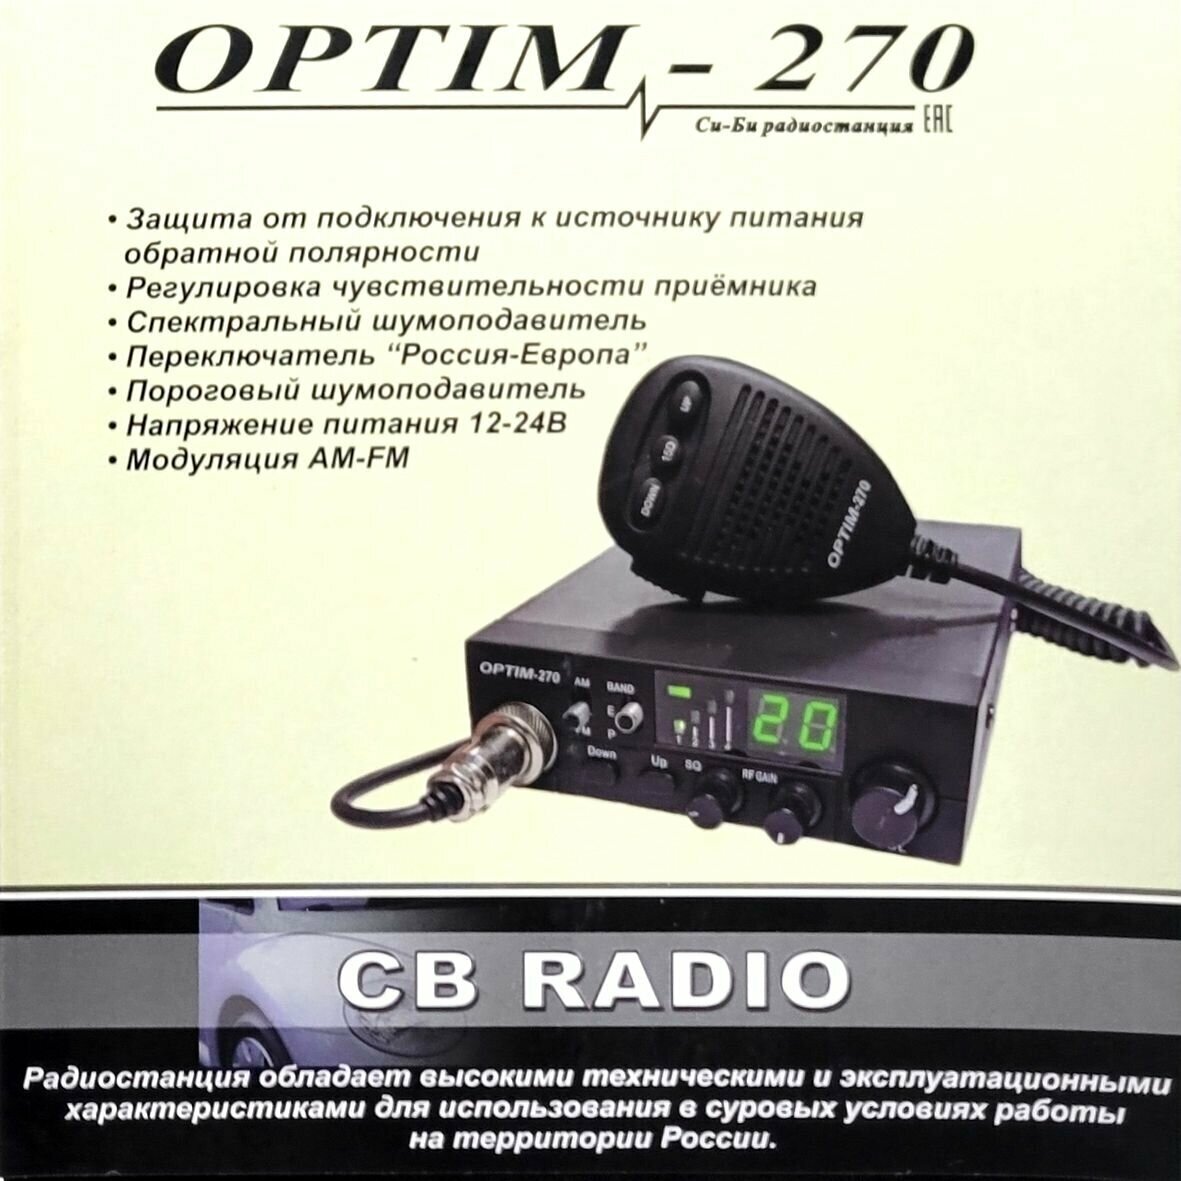 Optim-270 (Новый зеленый цвет табло)